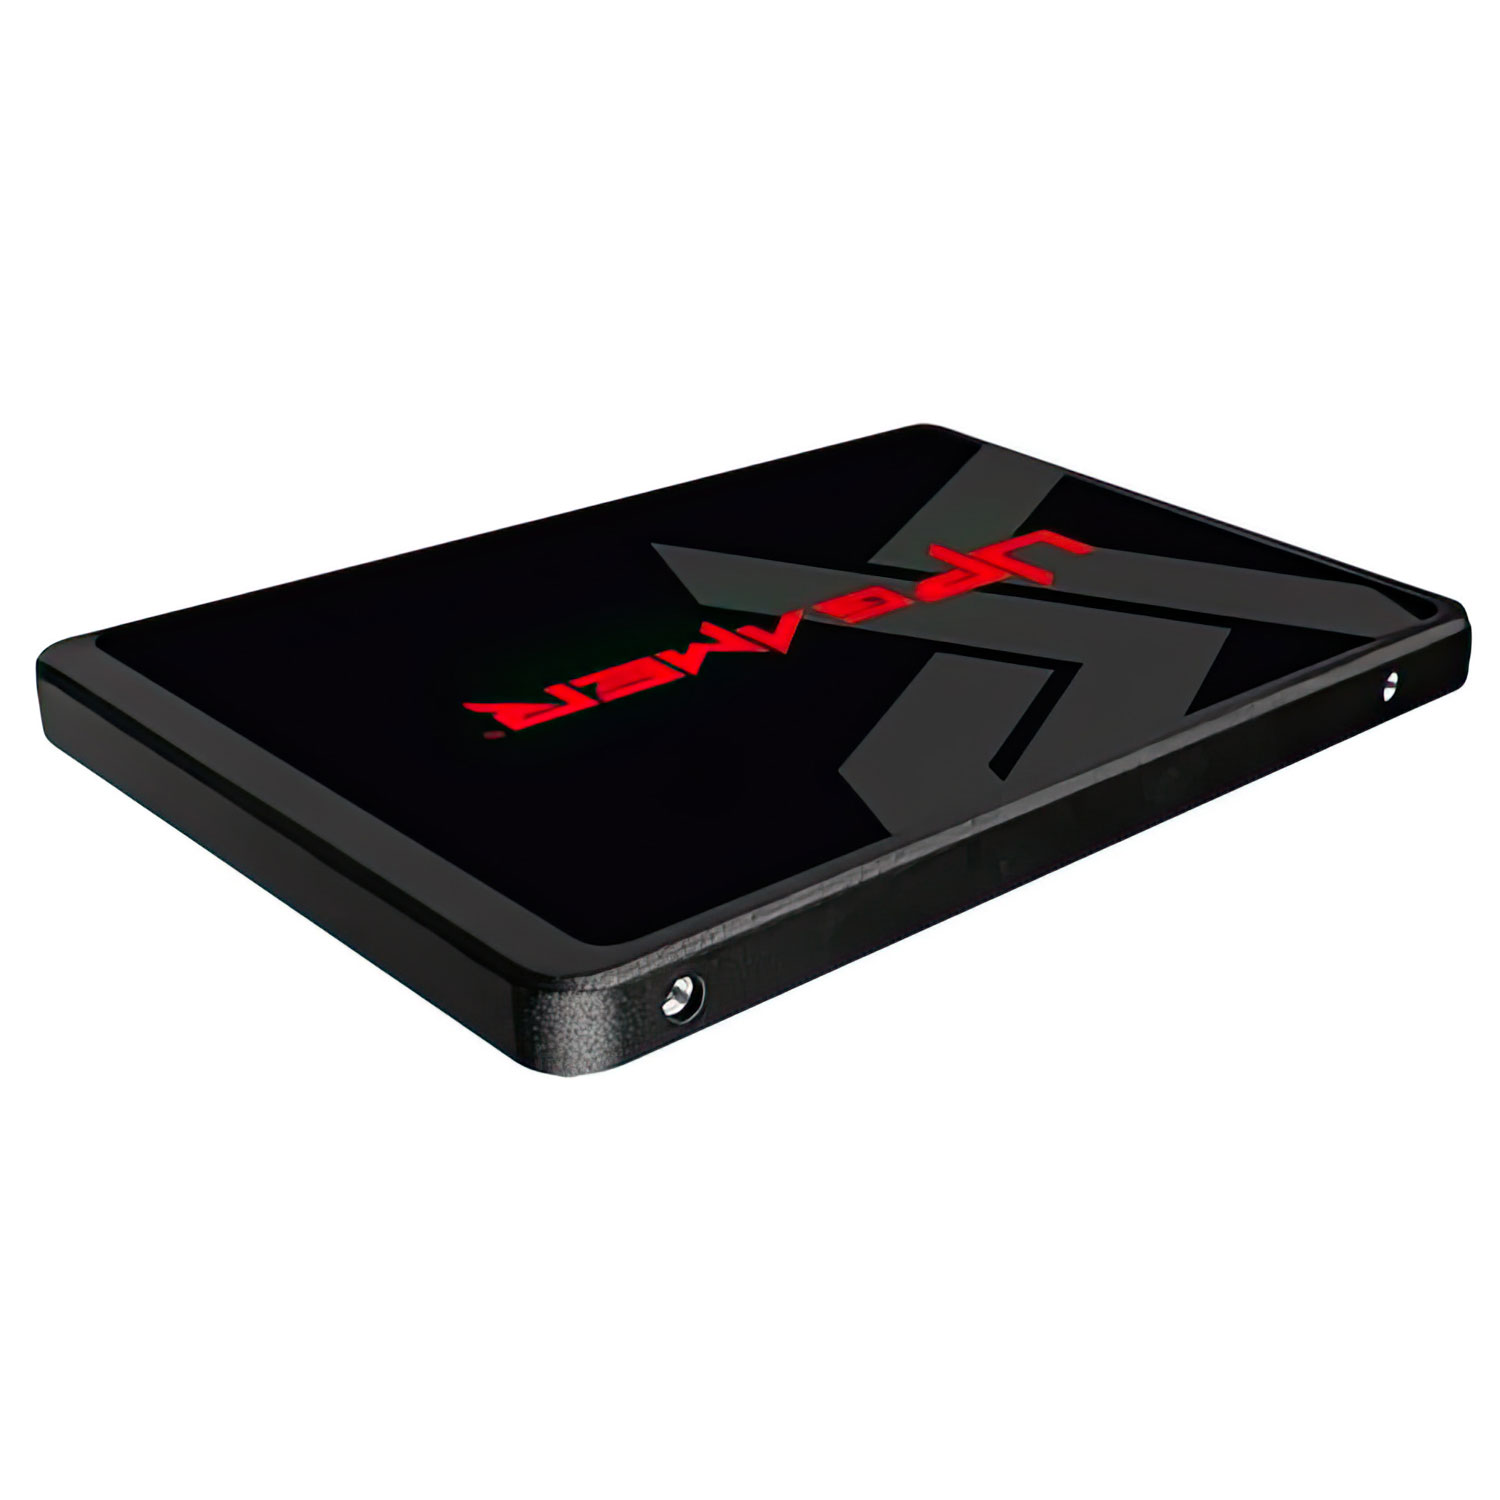 SSD UP Gamer UP500 2TB 2.5" SATA - (Blister)